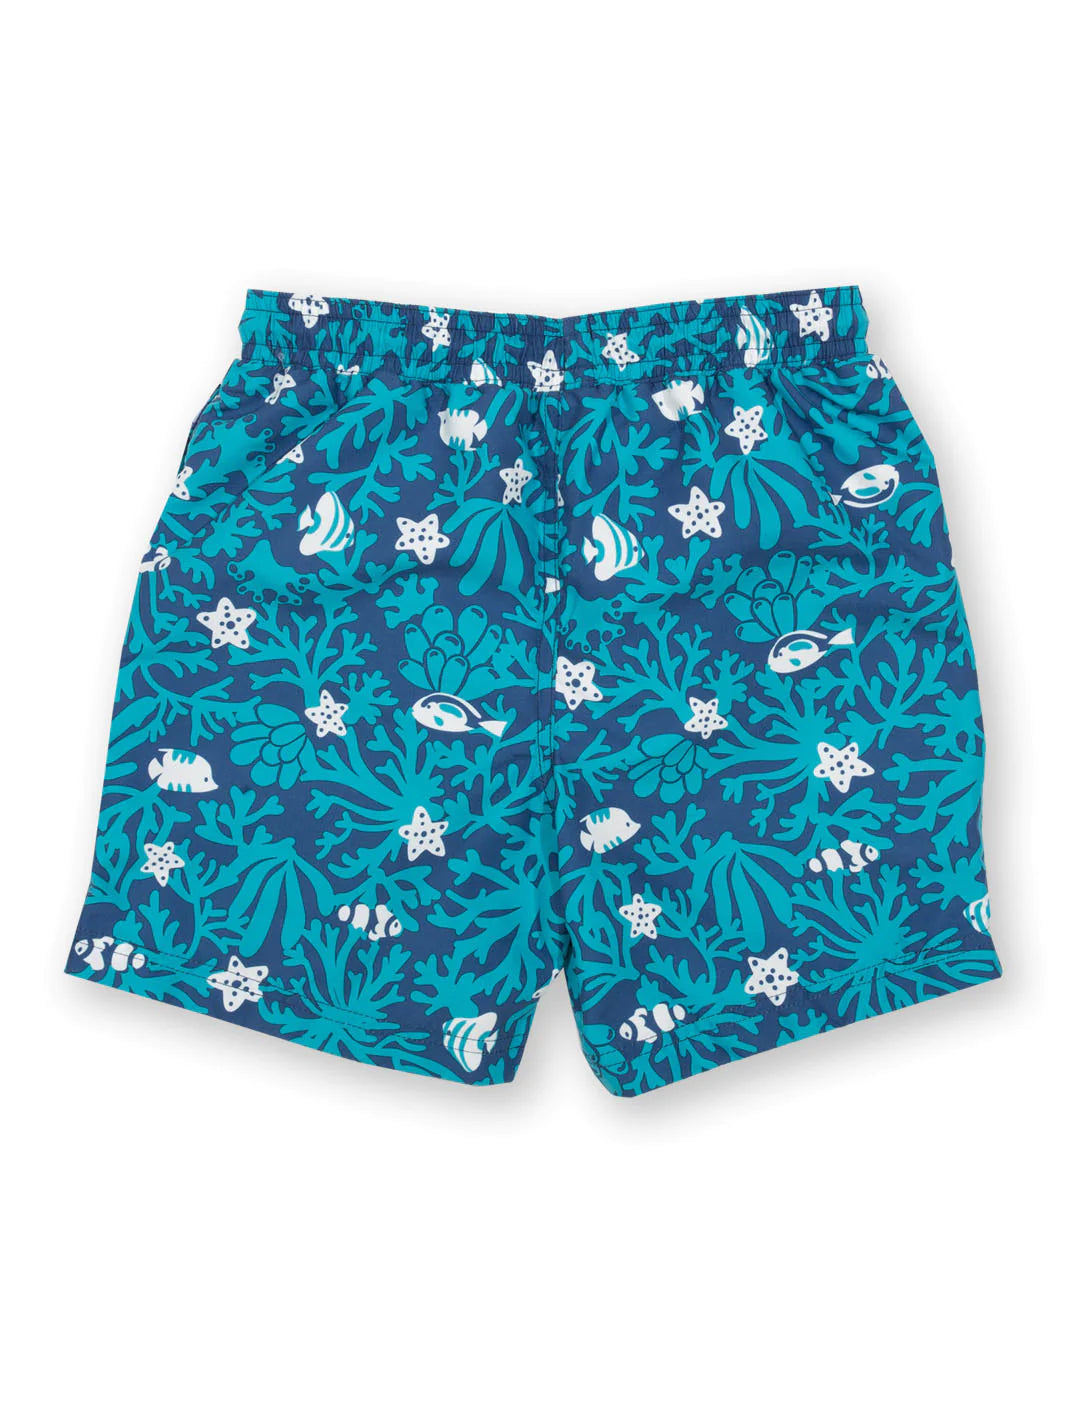 Coral Reef Swim Shorts